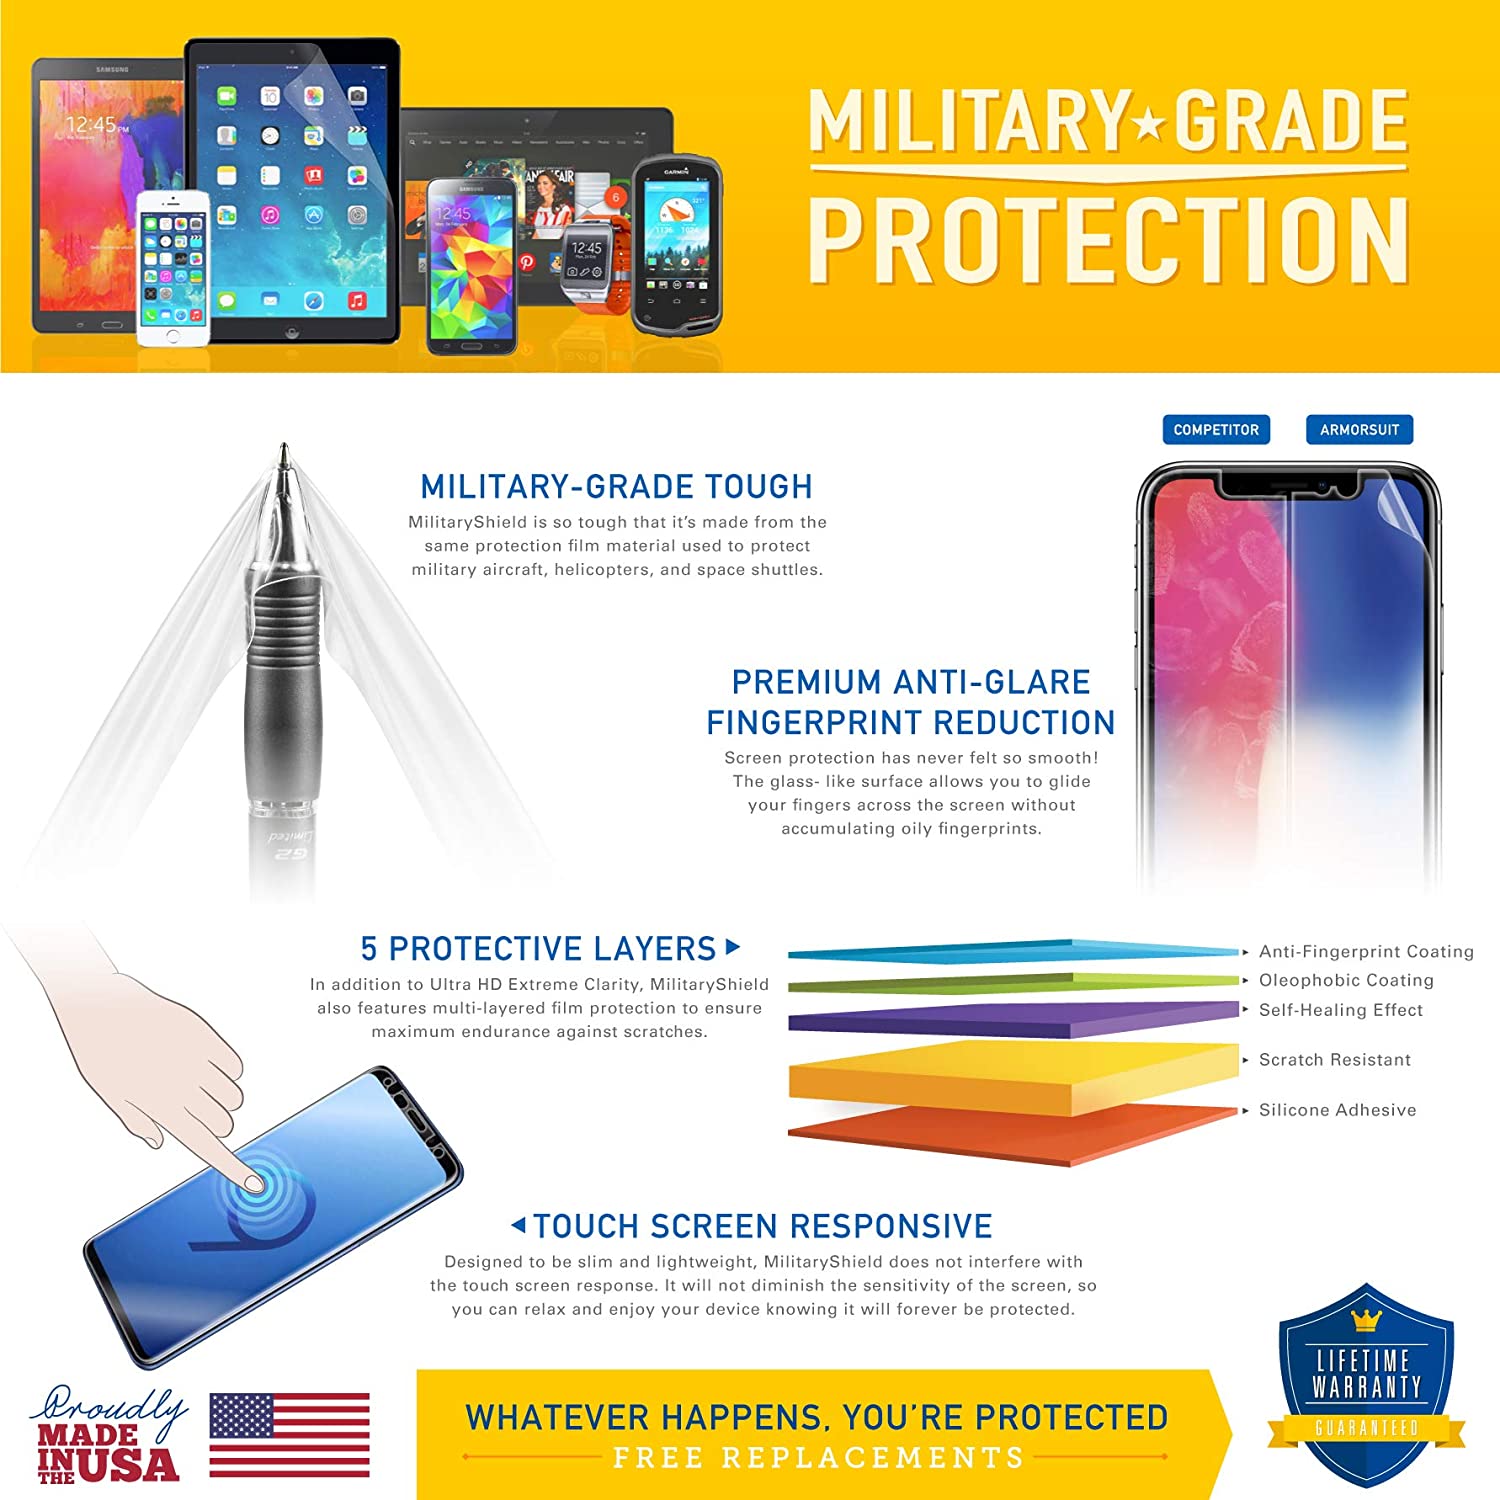 Samsung Gear S2 Screen Protector + Full Body Skin Protector